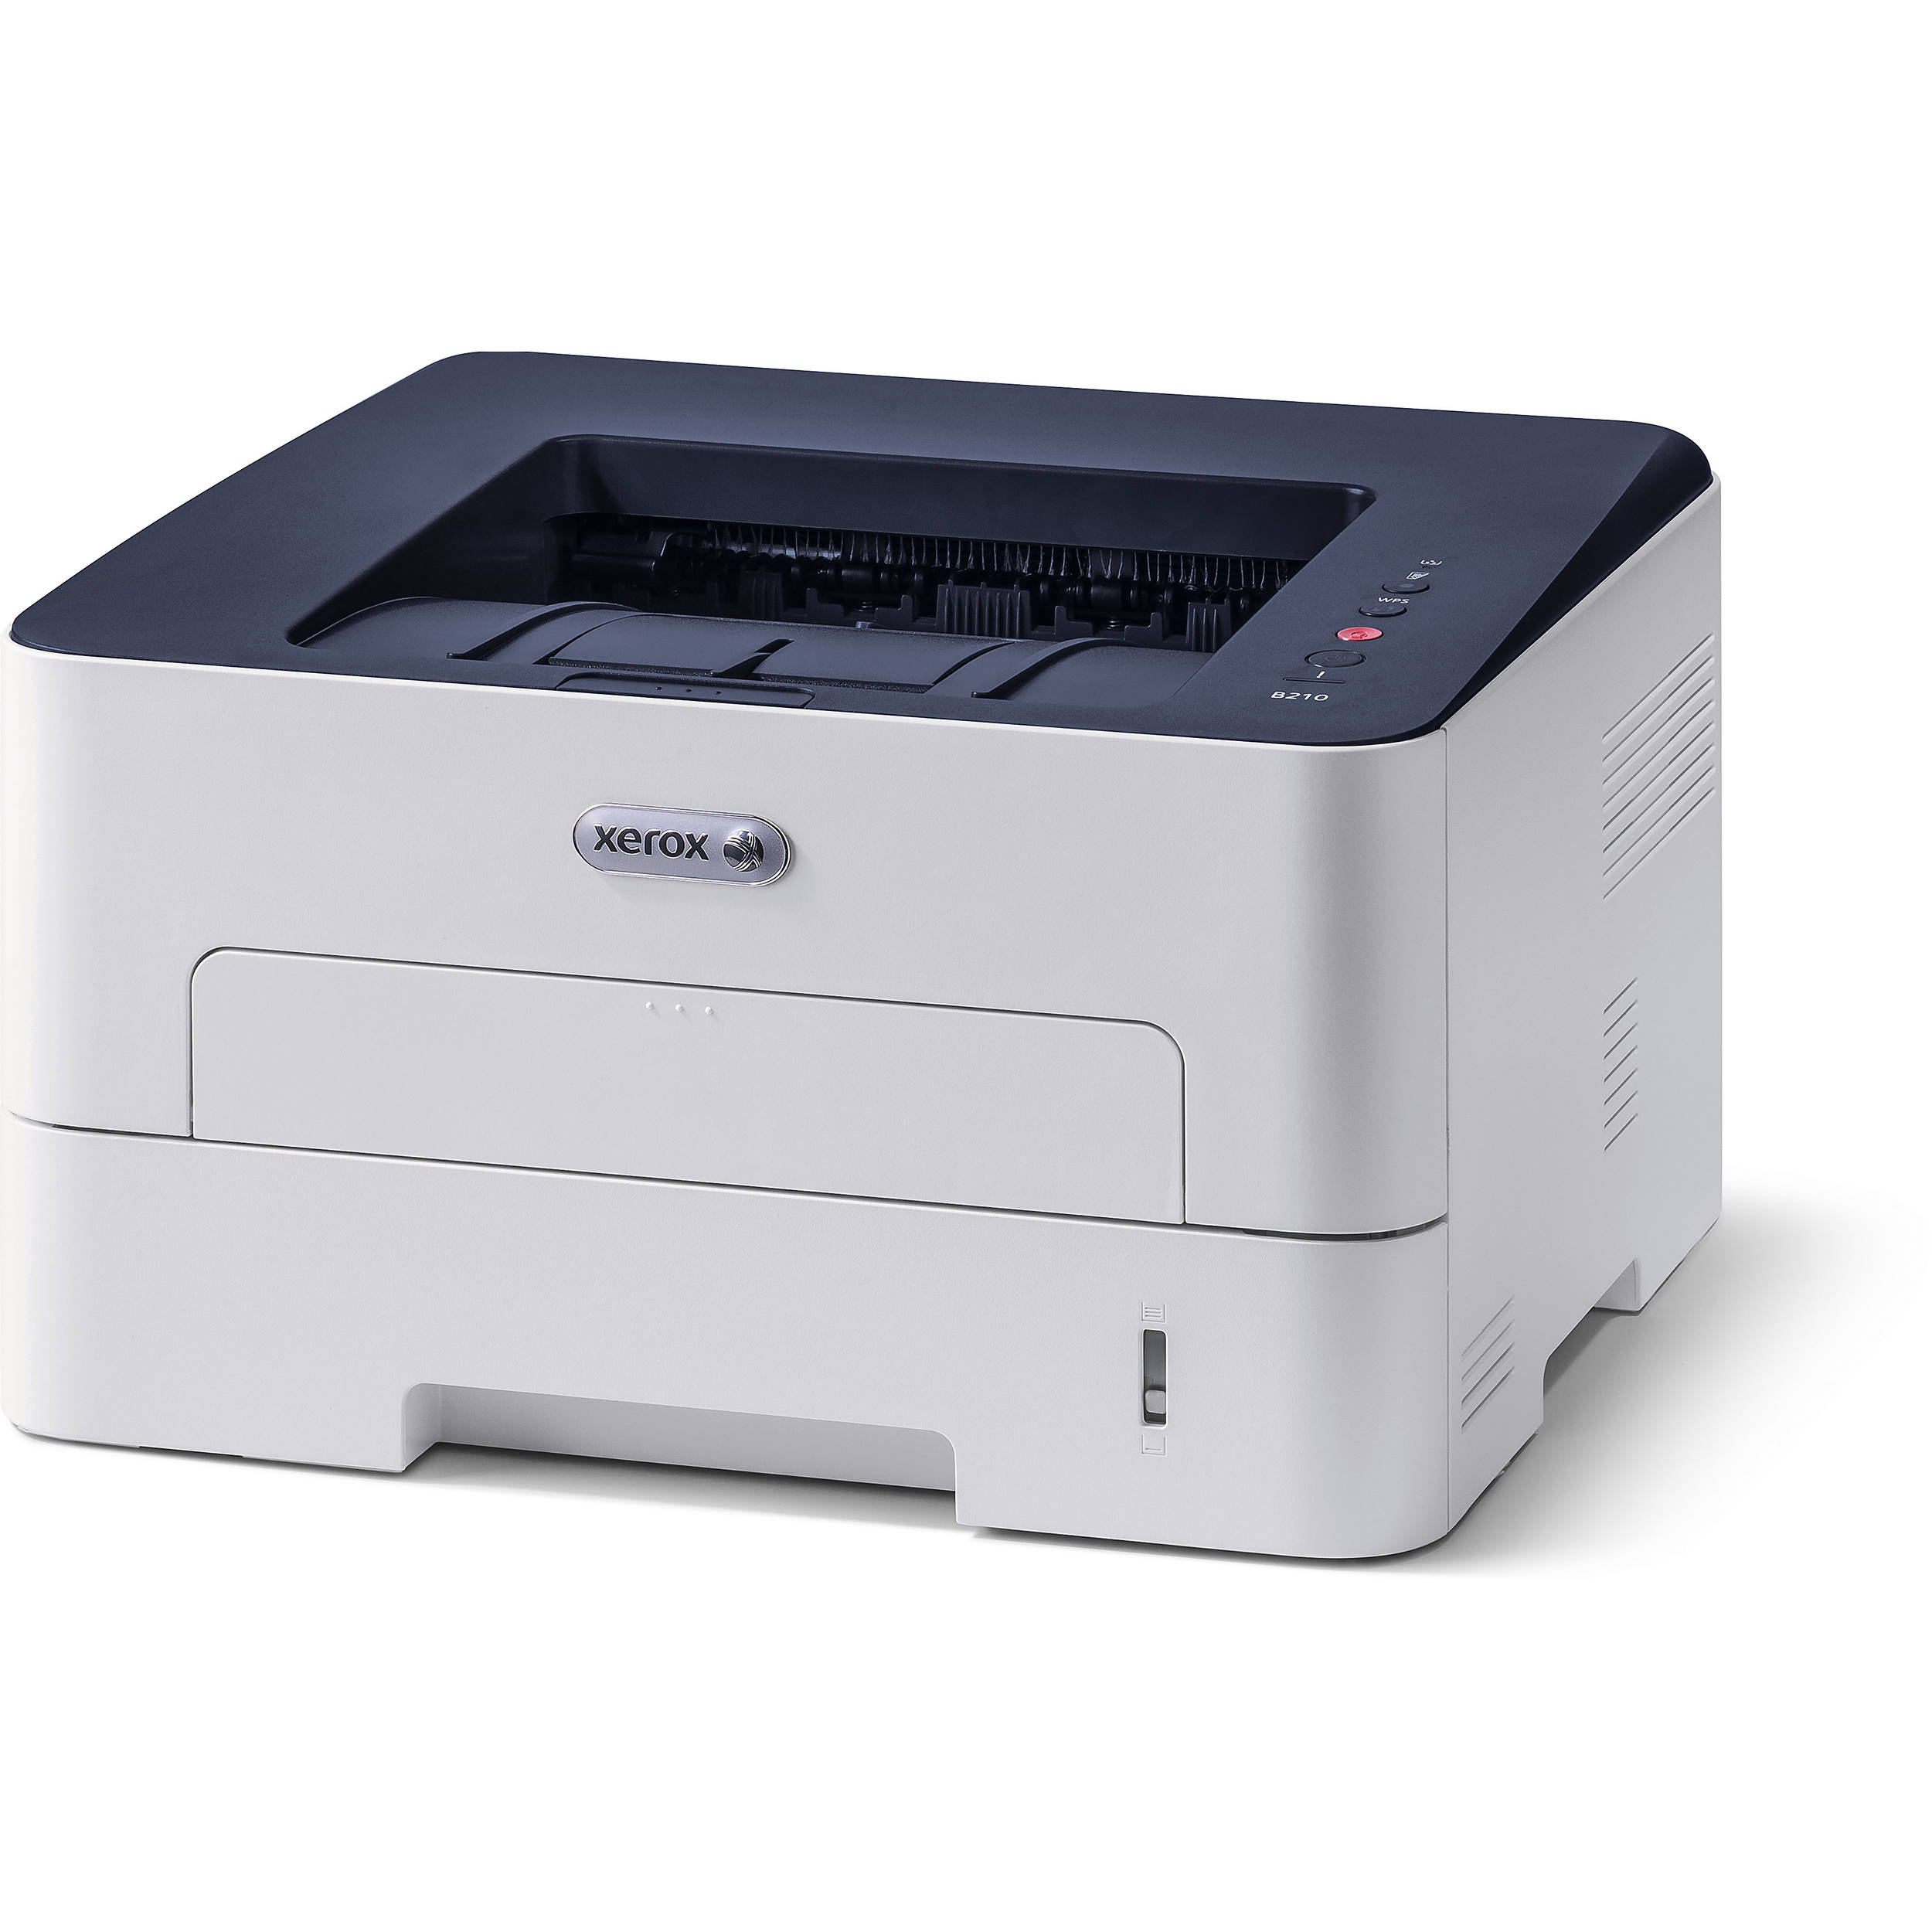 Принтер купить ситилинк. Принтер лазерный Xerox Phaser 3020bi. Принтер Xerox b210dni. Принтер Xerox Phaser 3052ni. Принтер Xerox b210 (b210dni).